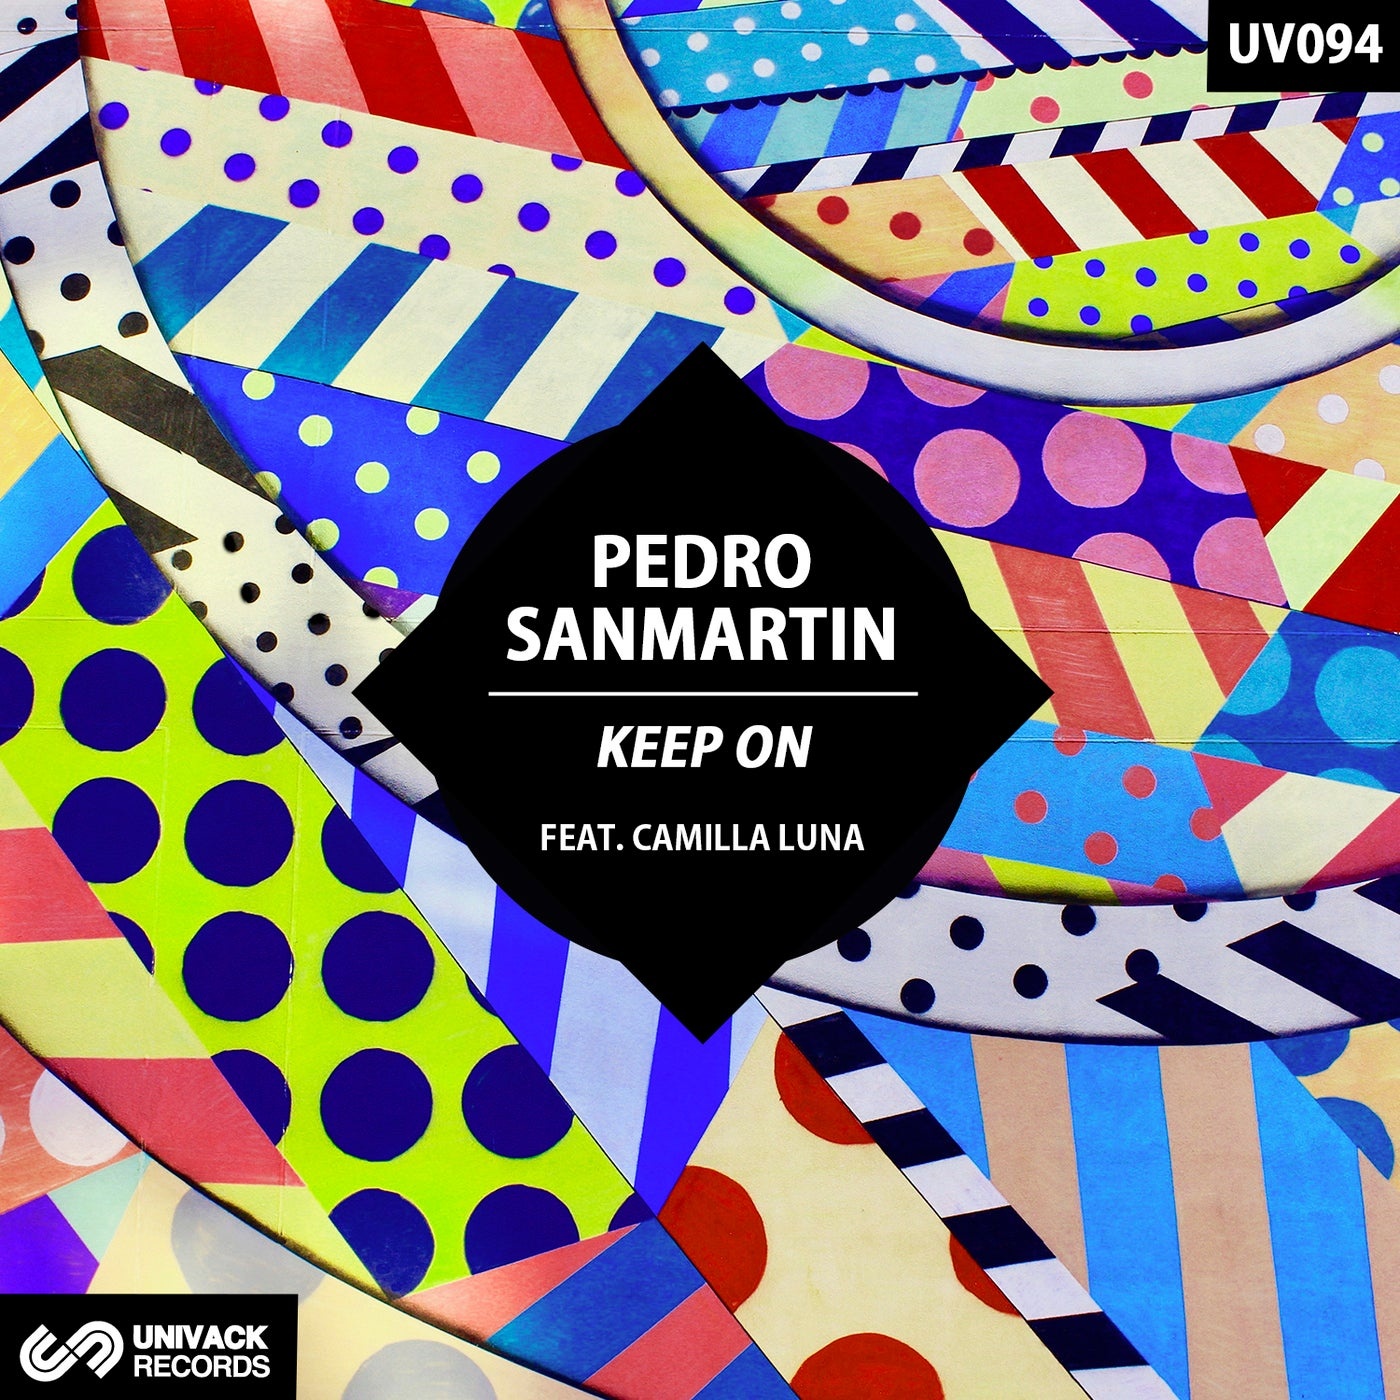 Pedro Sanmartin, Camilla Luna - Keep On [UV094]